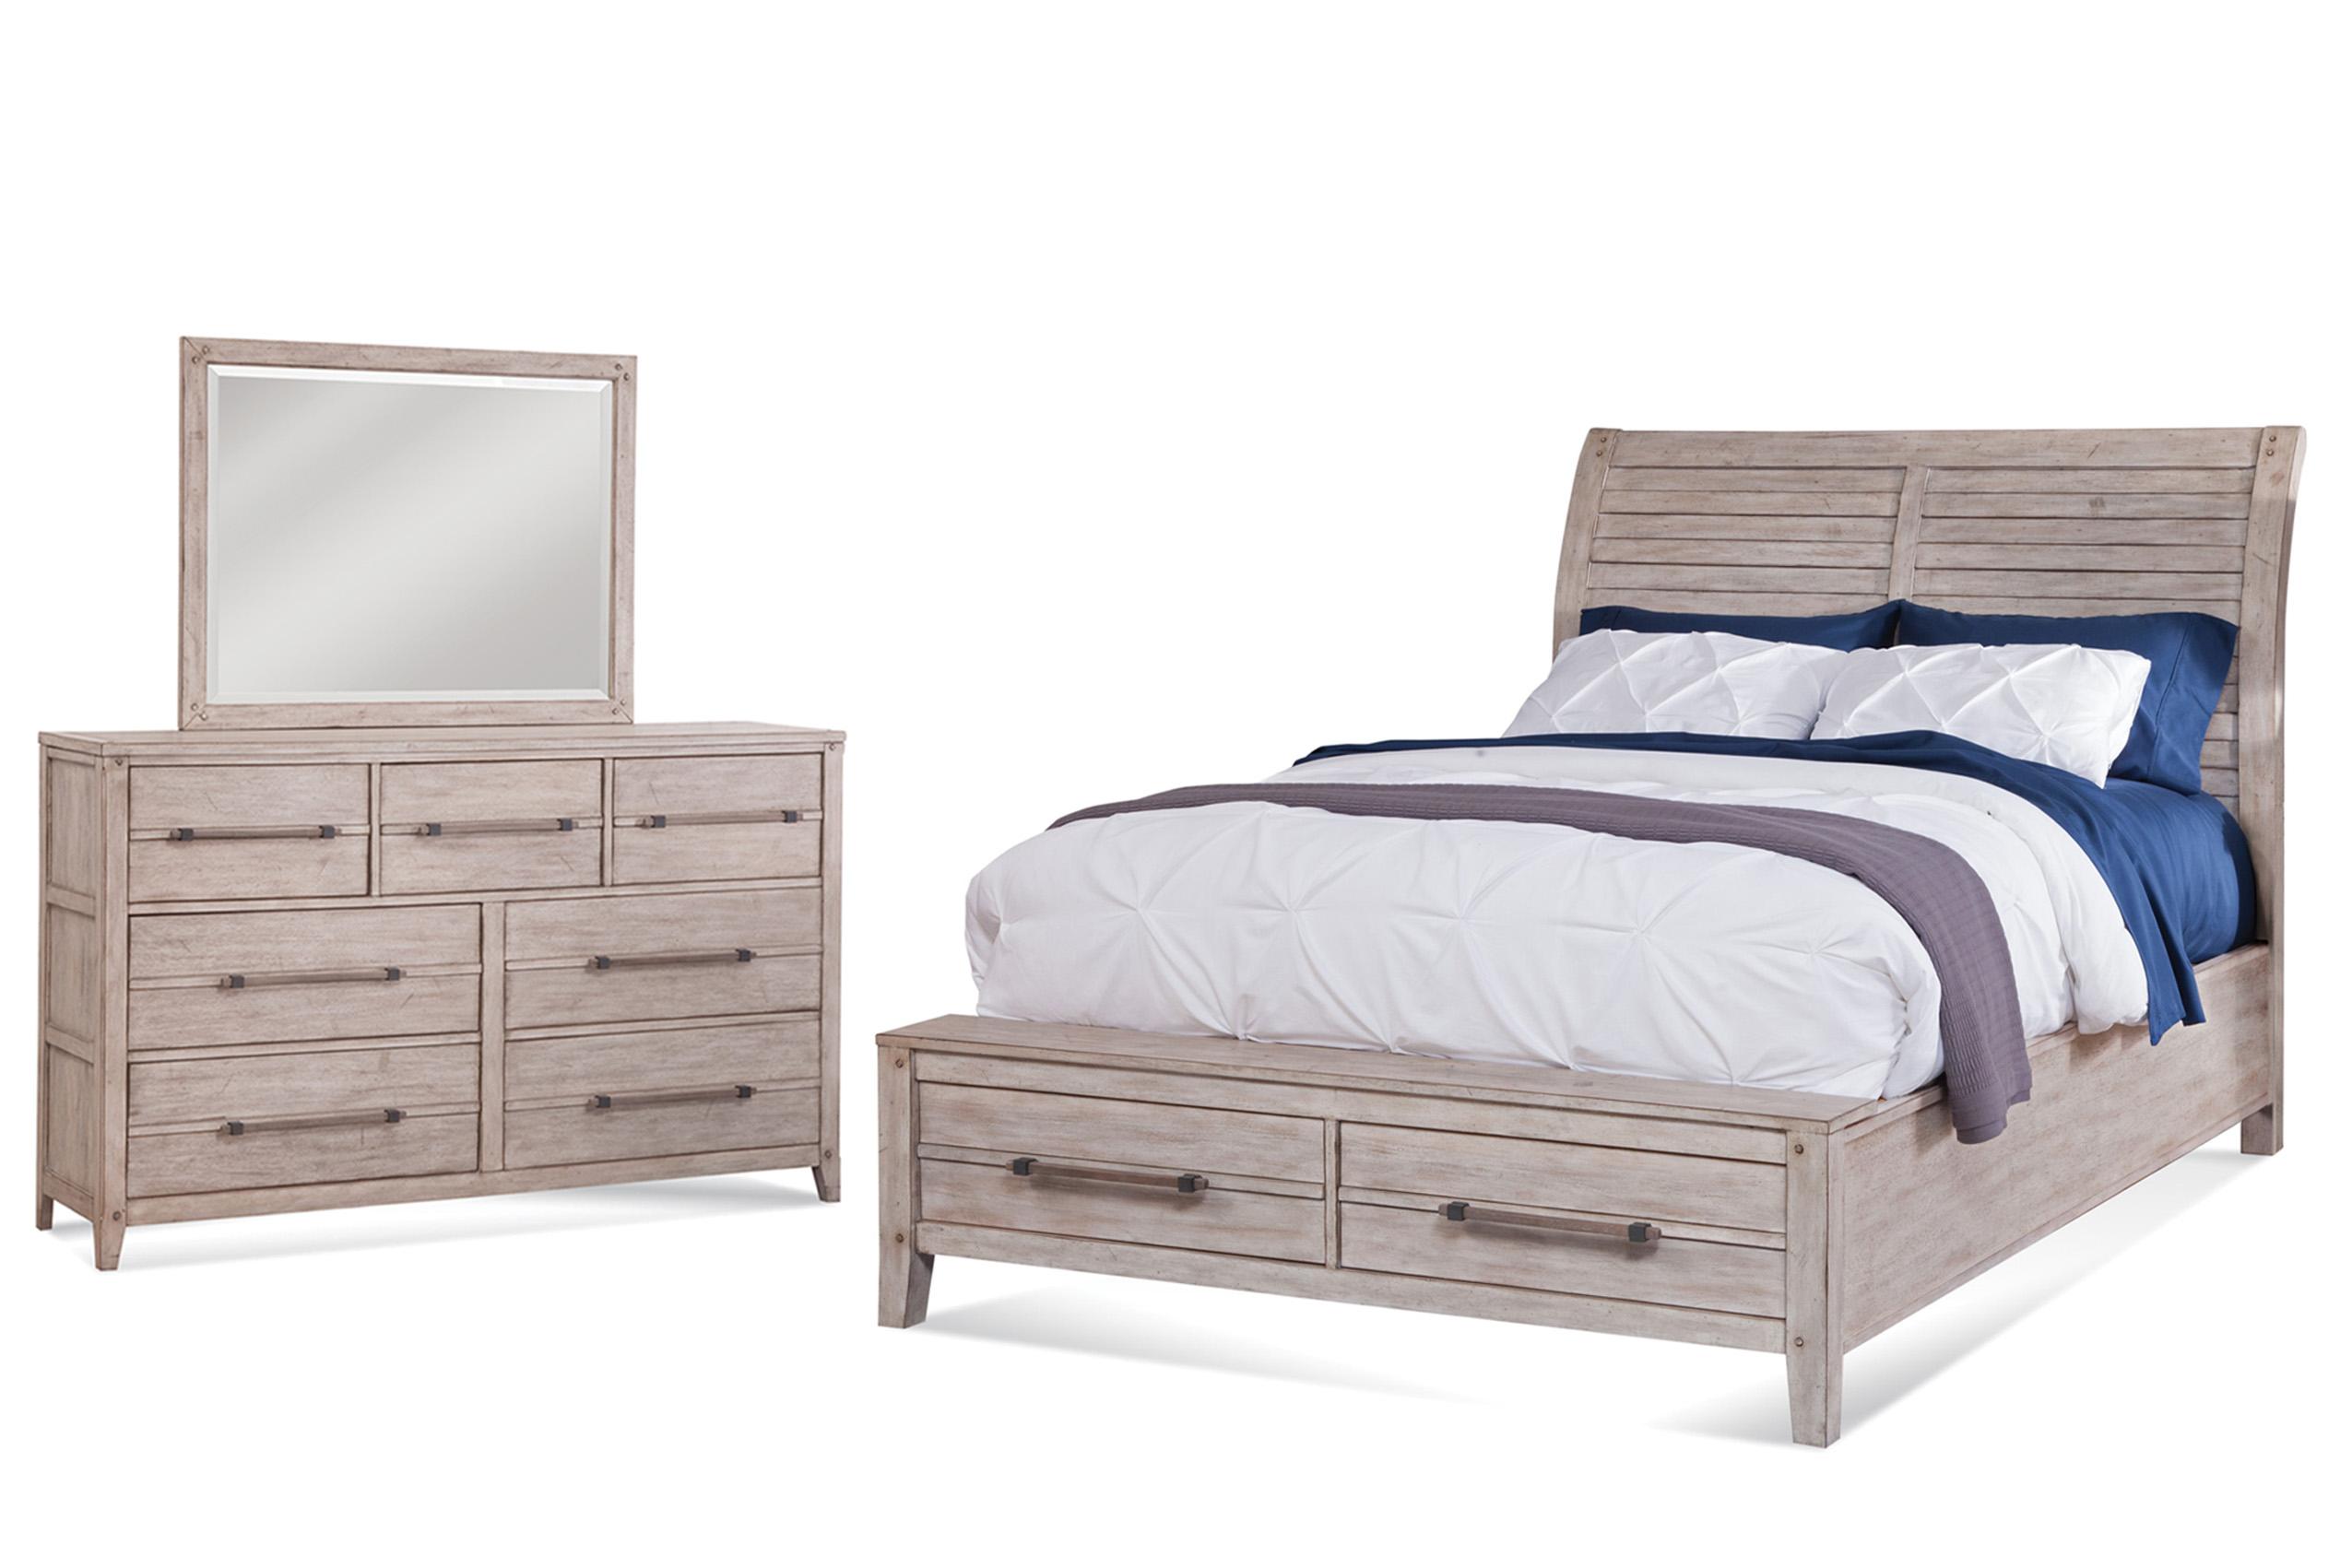 Classic, Traditional Sleigh Bedroom Set AURORA 2810-50PSB 2810-QSLST-3PC in whitewash 